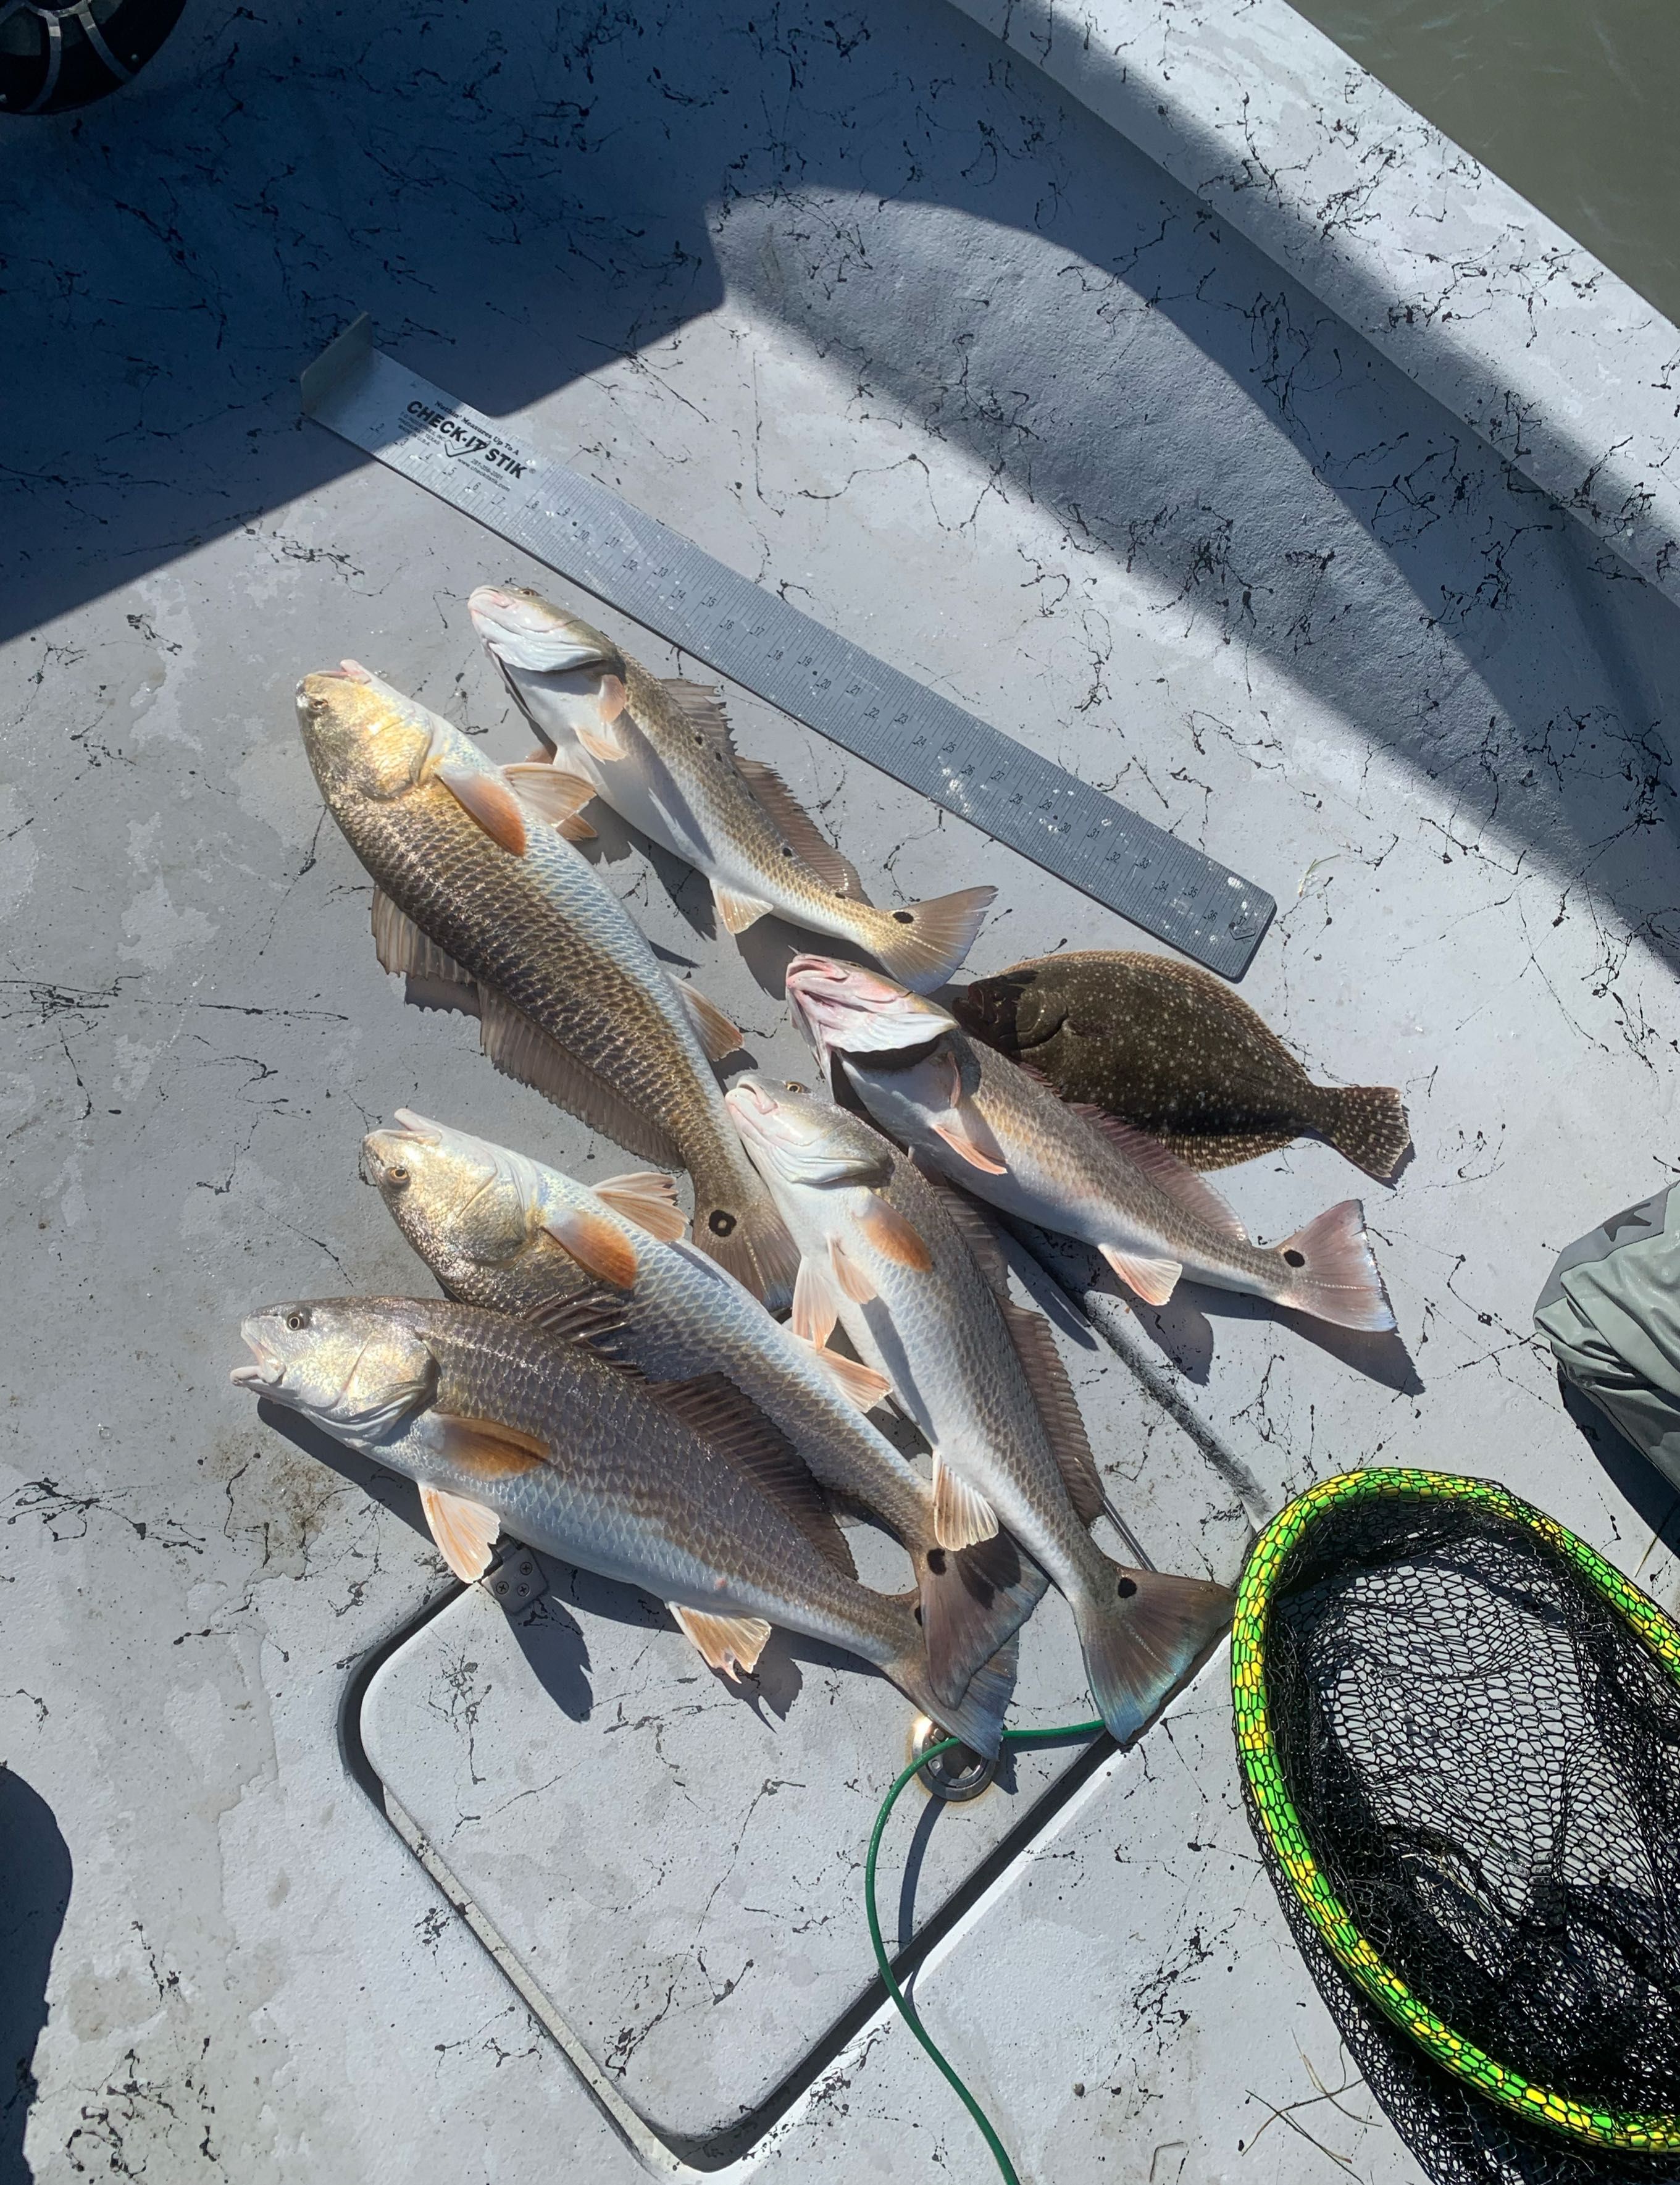 D Reel Guiding Corpus Christi Fishing charters | Full Day Trip fishing Inshore